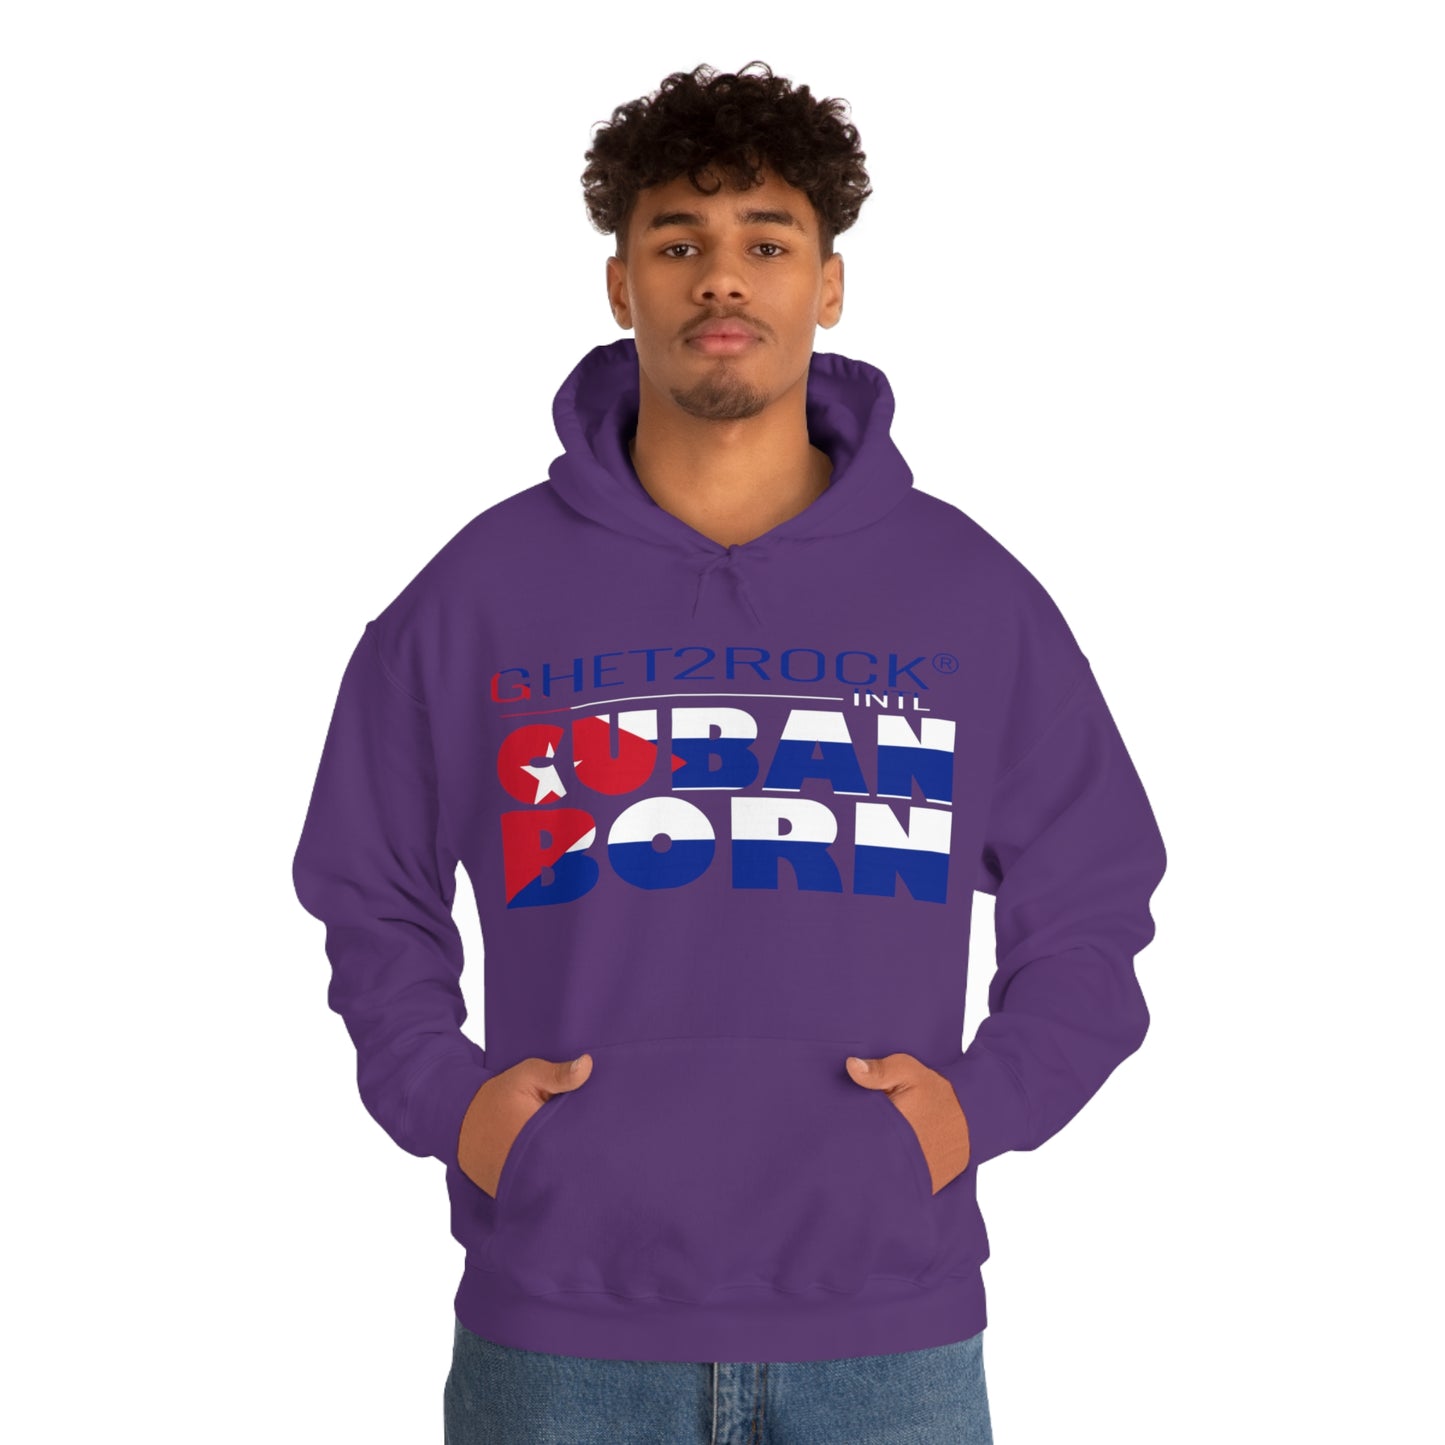 Cuban Born Unisex Heavy Blend™ Hooded Sweatshirt